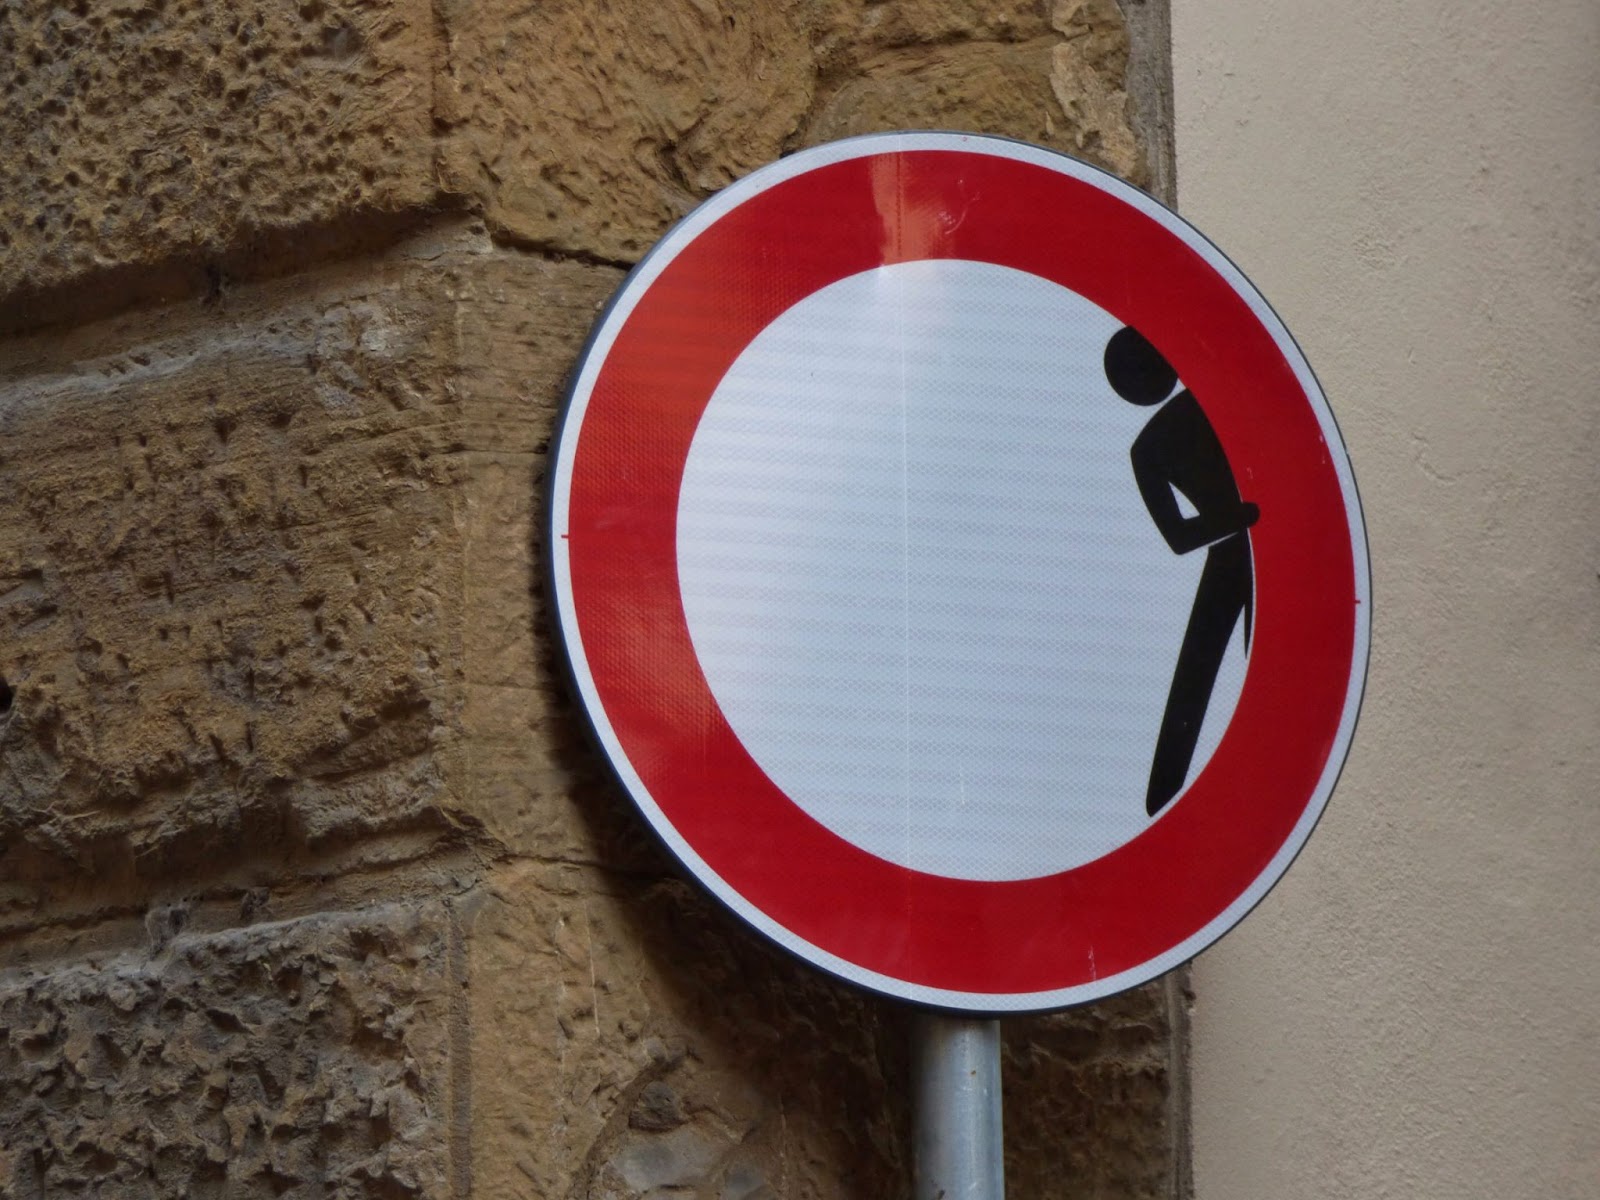 Red circular road sign with peeking man